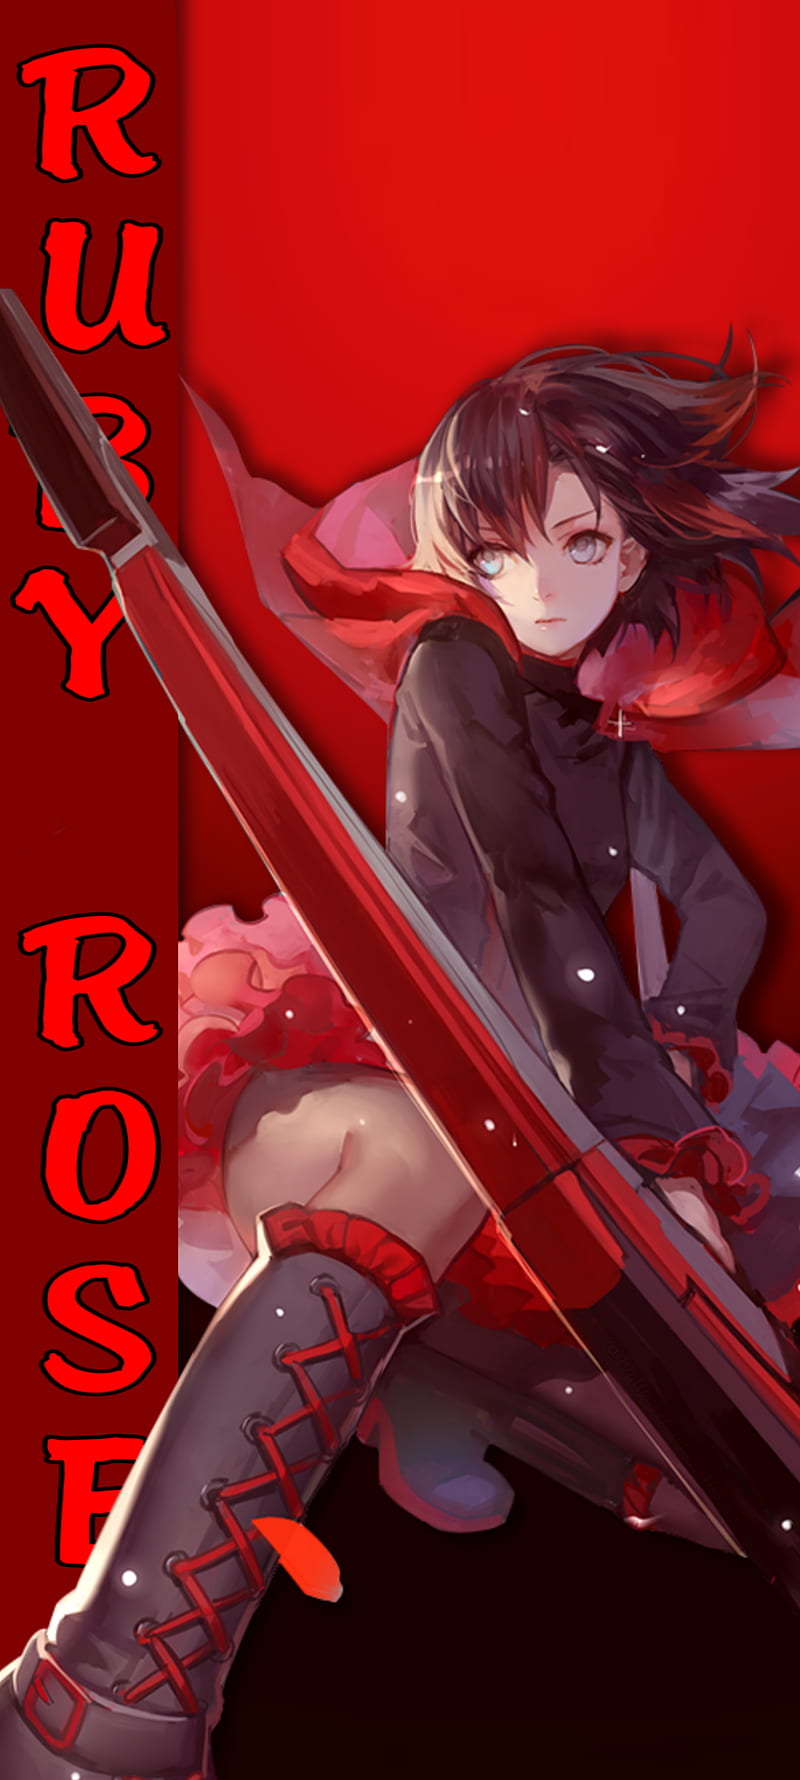 Ruby Rose | Character Profile Wikia | Fandom